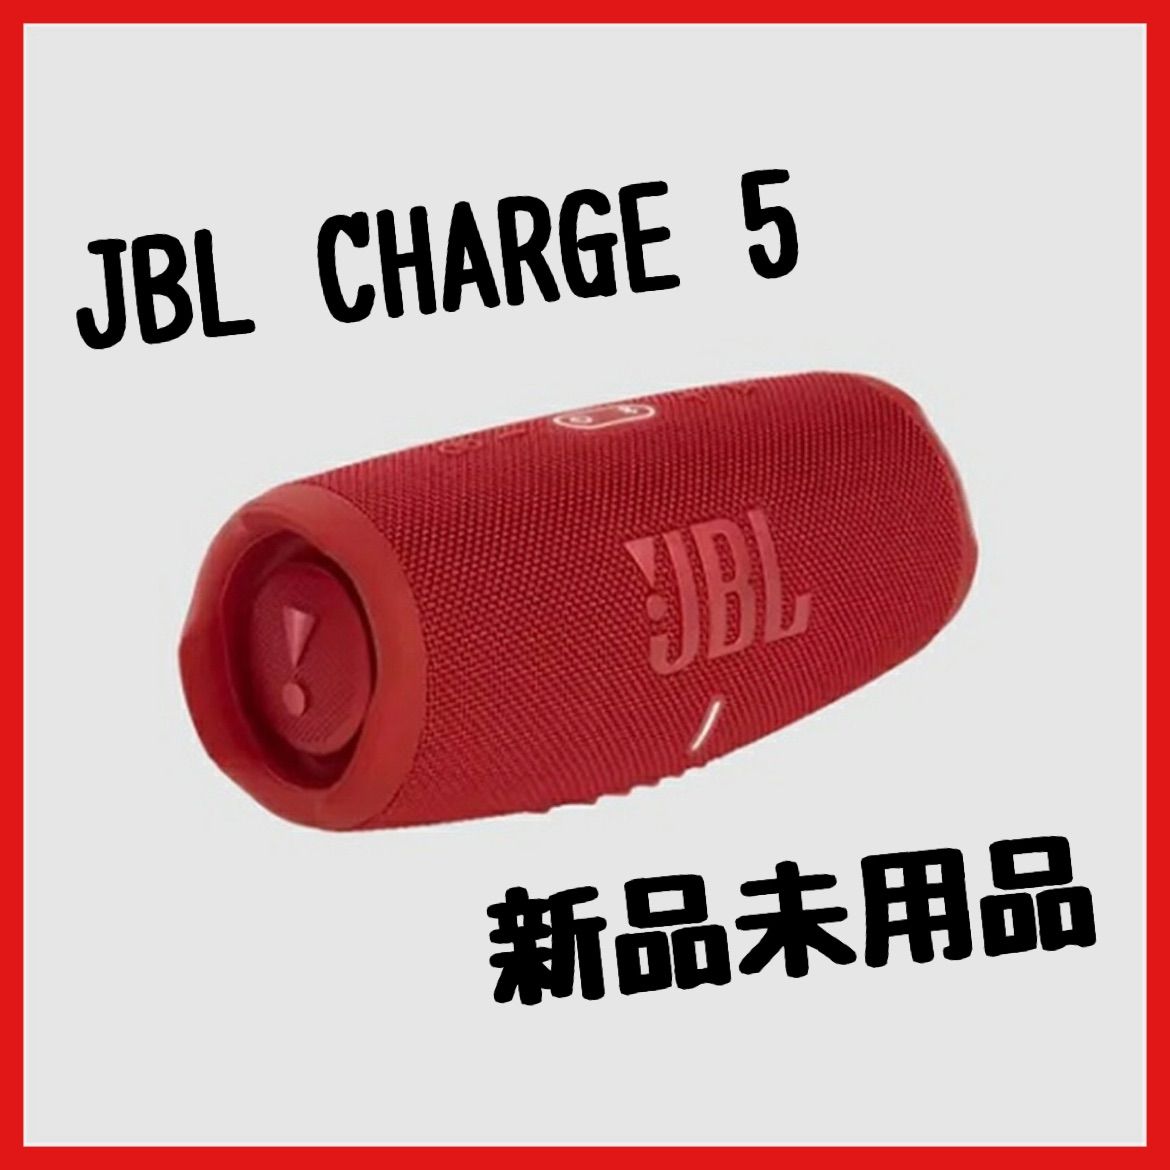 JBL CHARGE 5 チャージ5 レッド RED - メルカリ